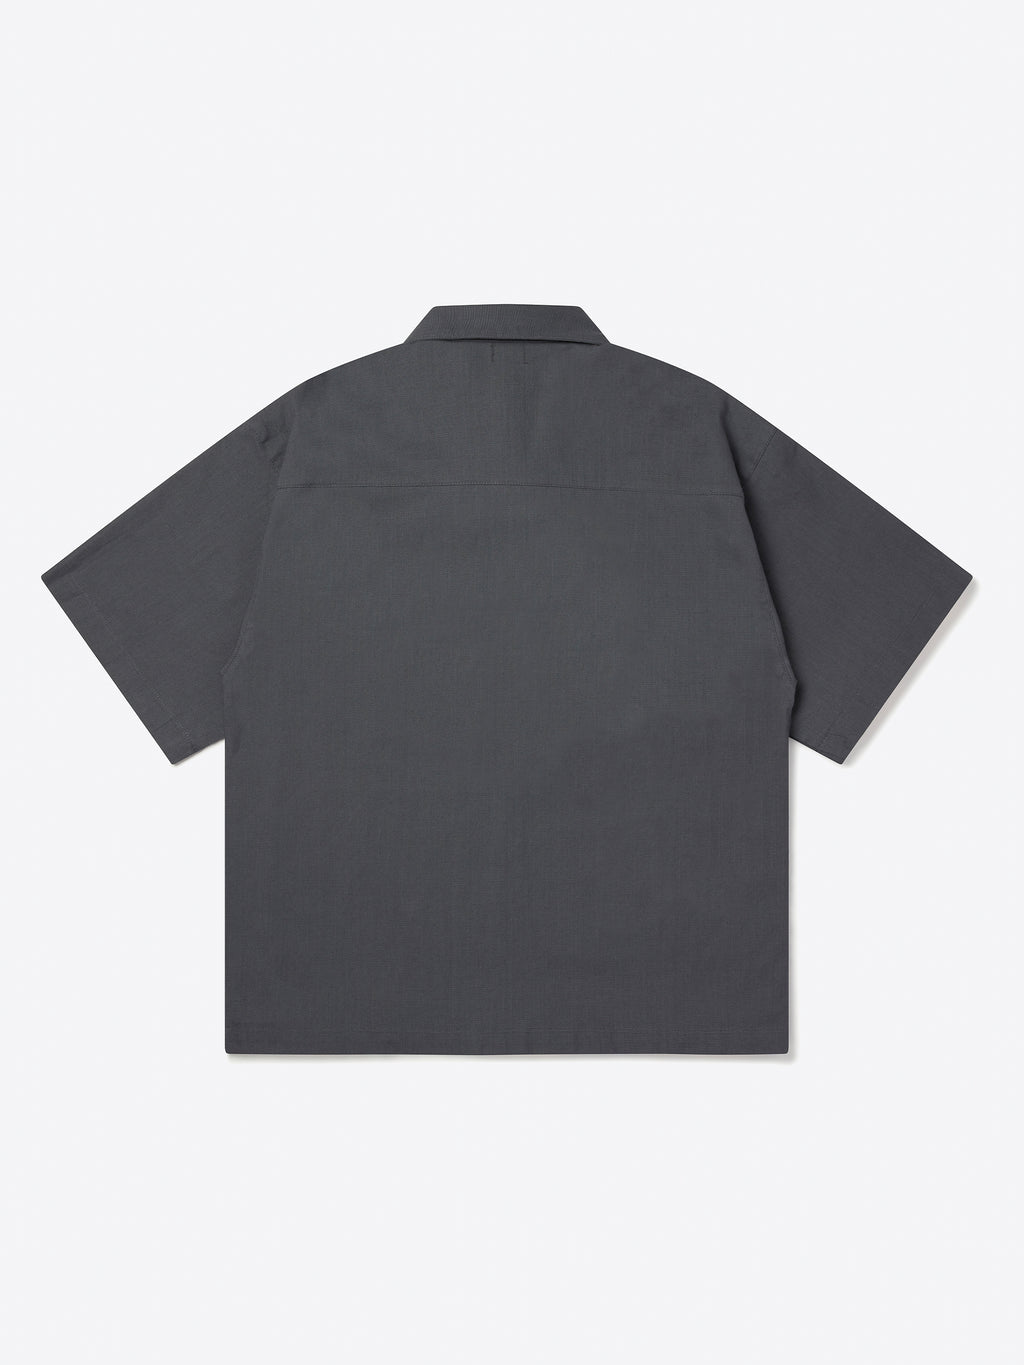 Travis Shirt - Charcoal